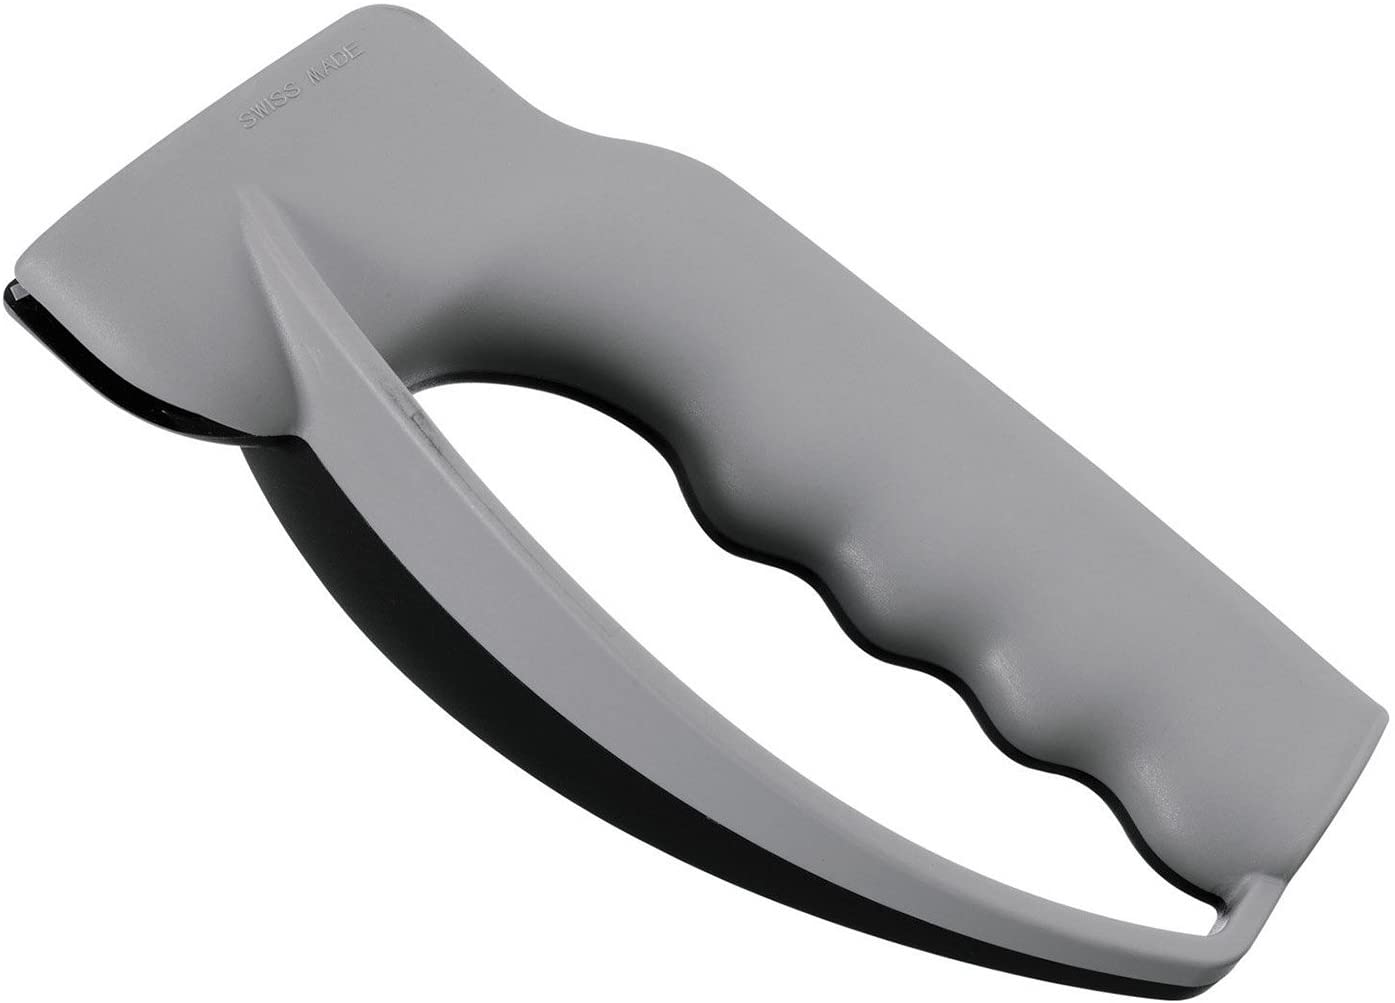 Victorinox knife sharpener, multicolored black / gray